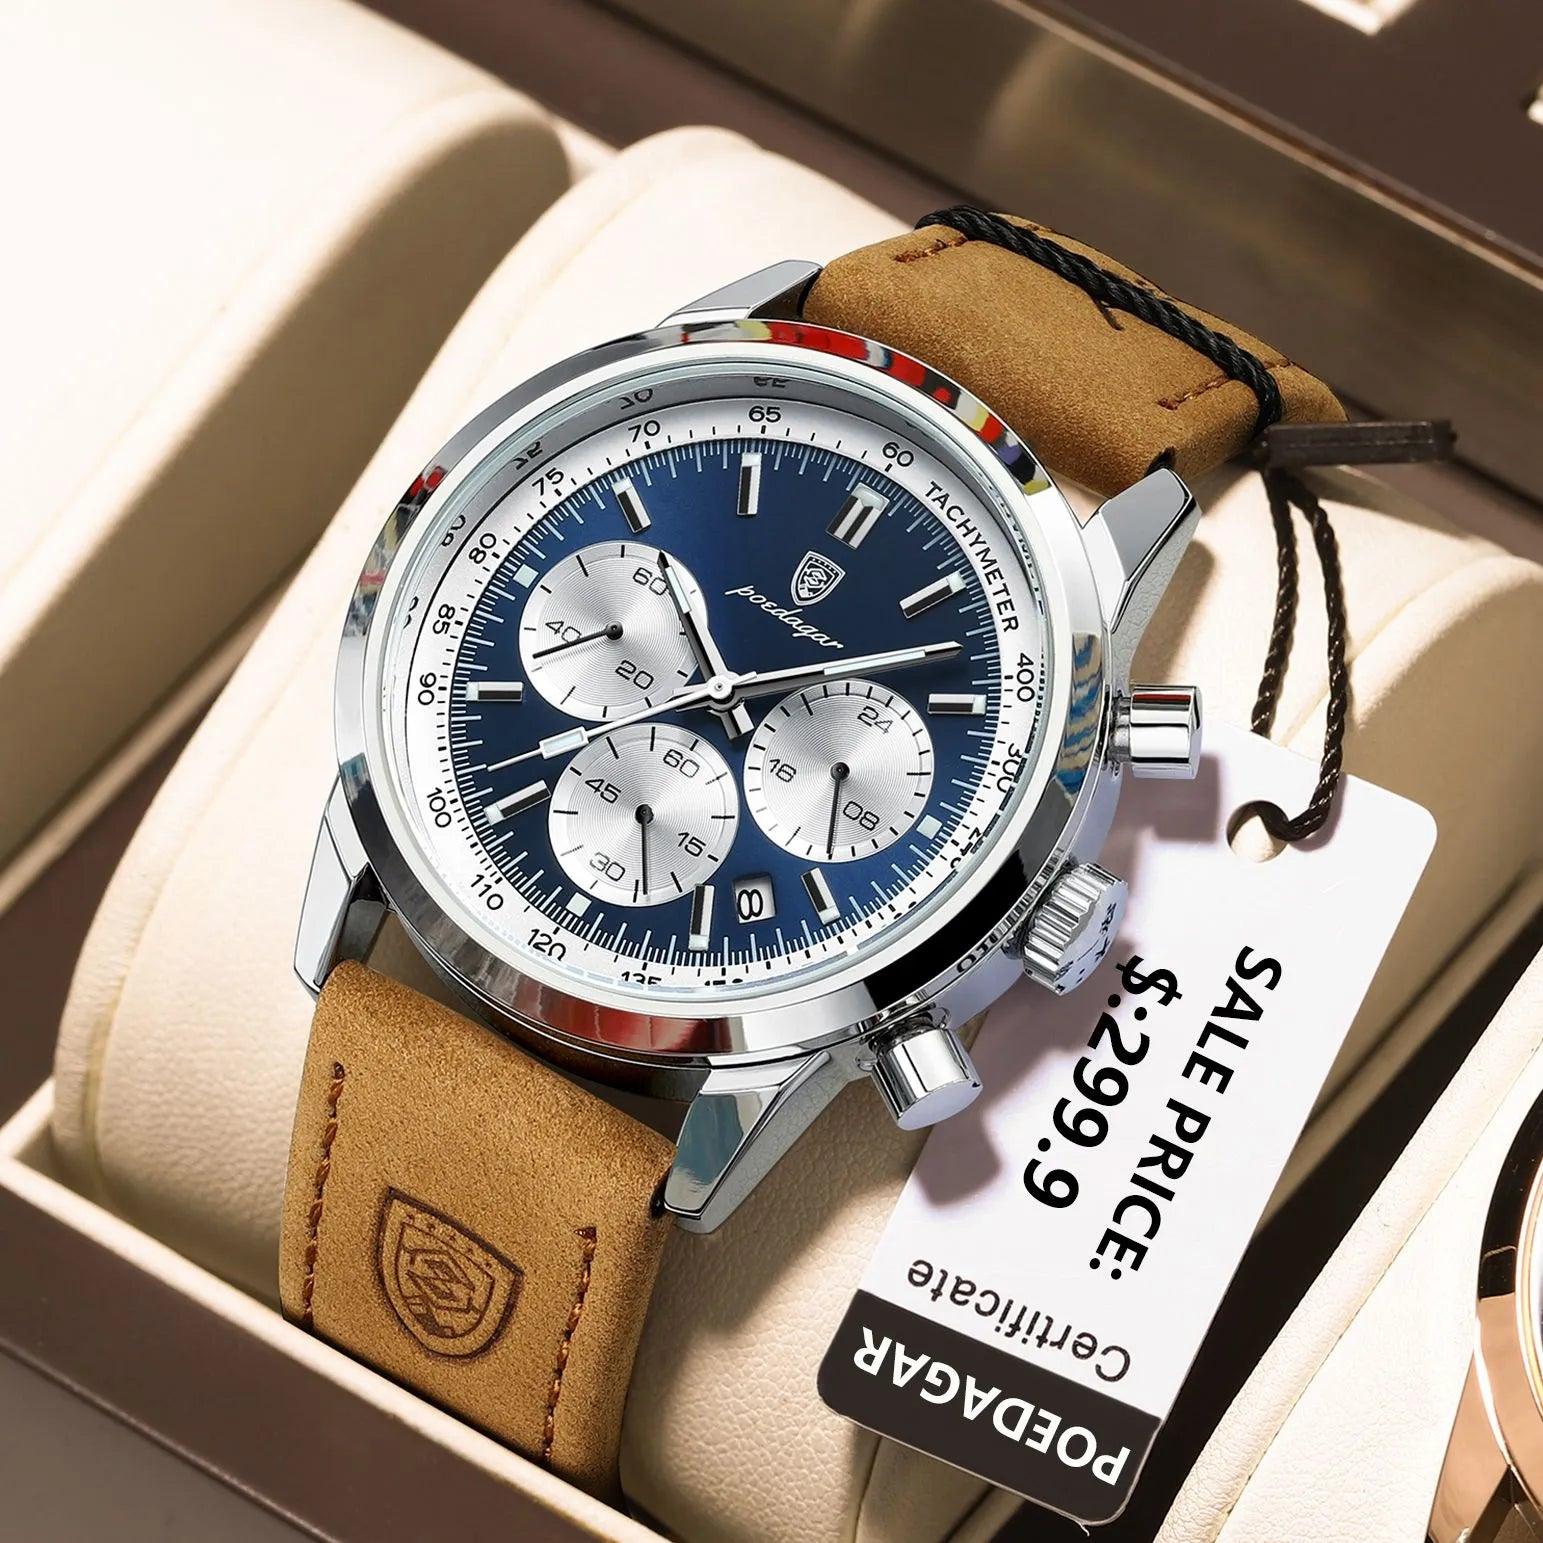 Luxury Chronograph Men's Watch with Luminous Details & Waterproof Design  ourlum.com   